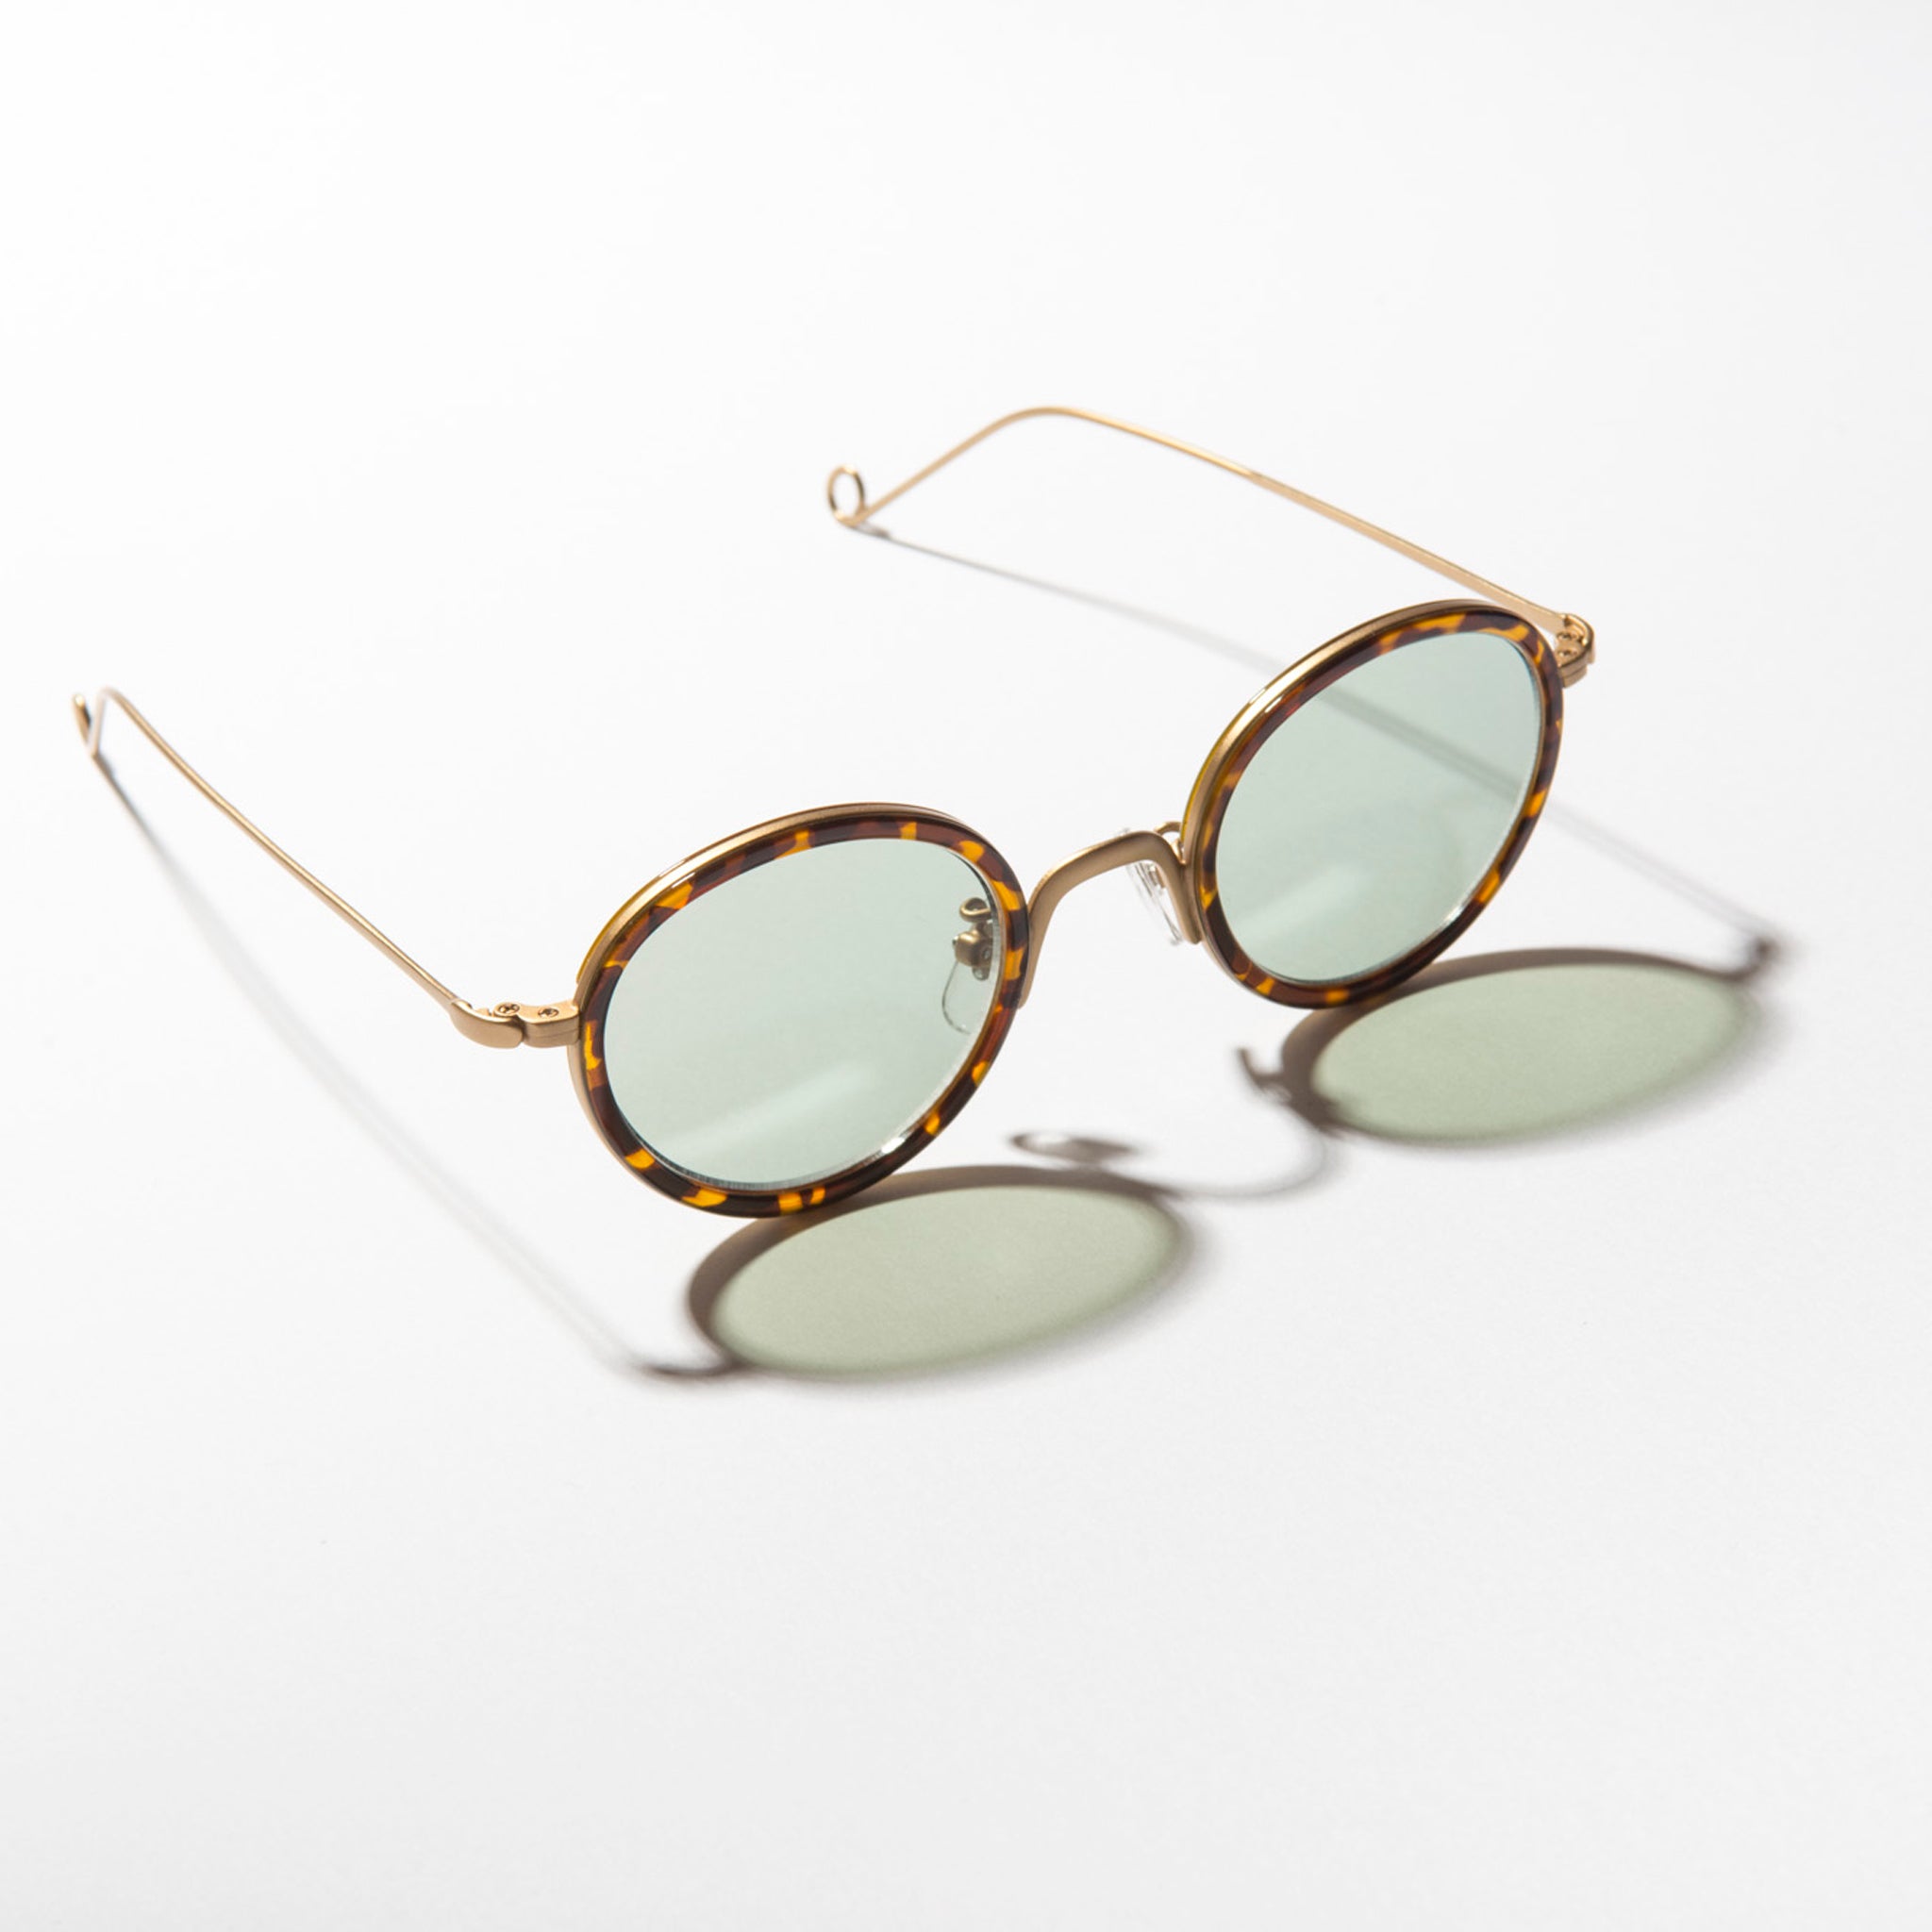 【Ciqi】HERBIE サングラス Vintage Brown Light Green Lens Sunglasses(ハービー ビンテージブラウン ライトグリーンレンズ)